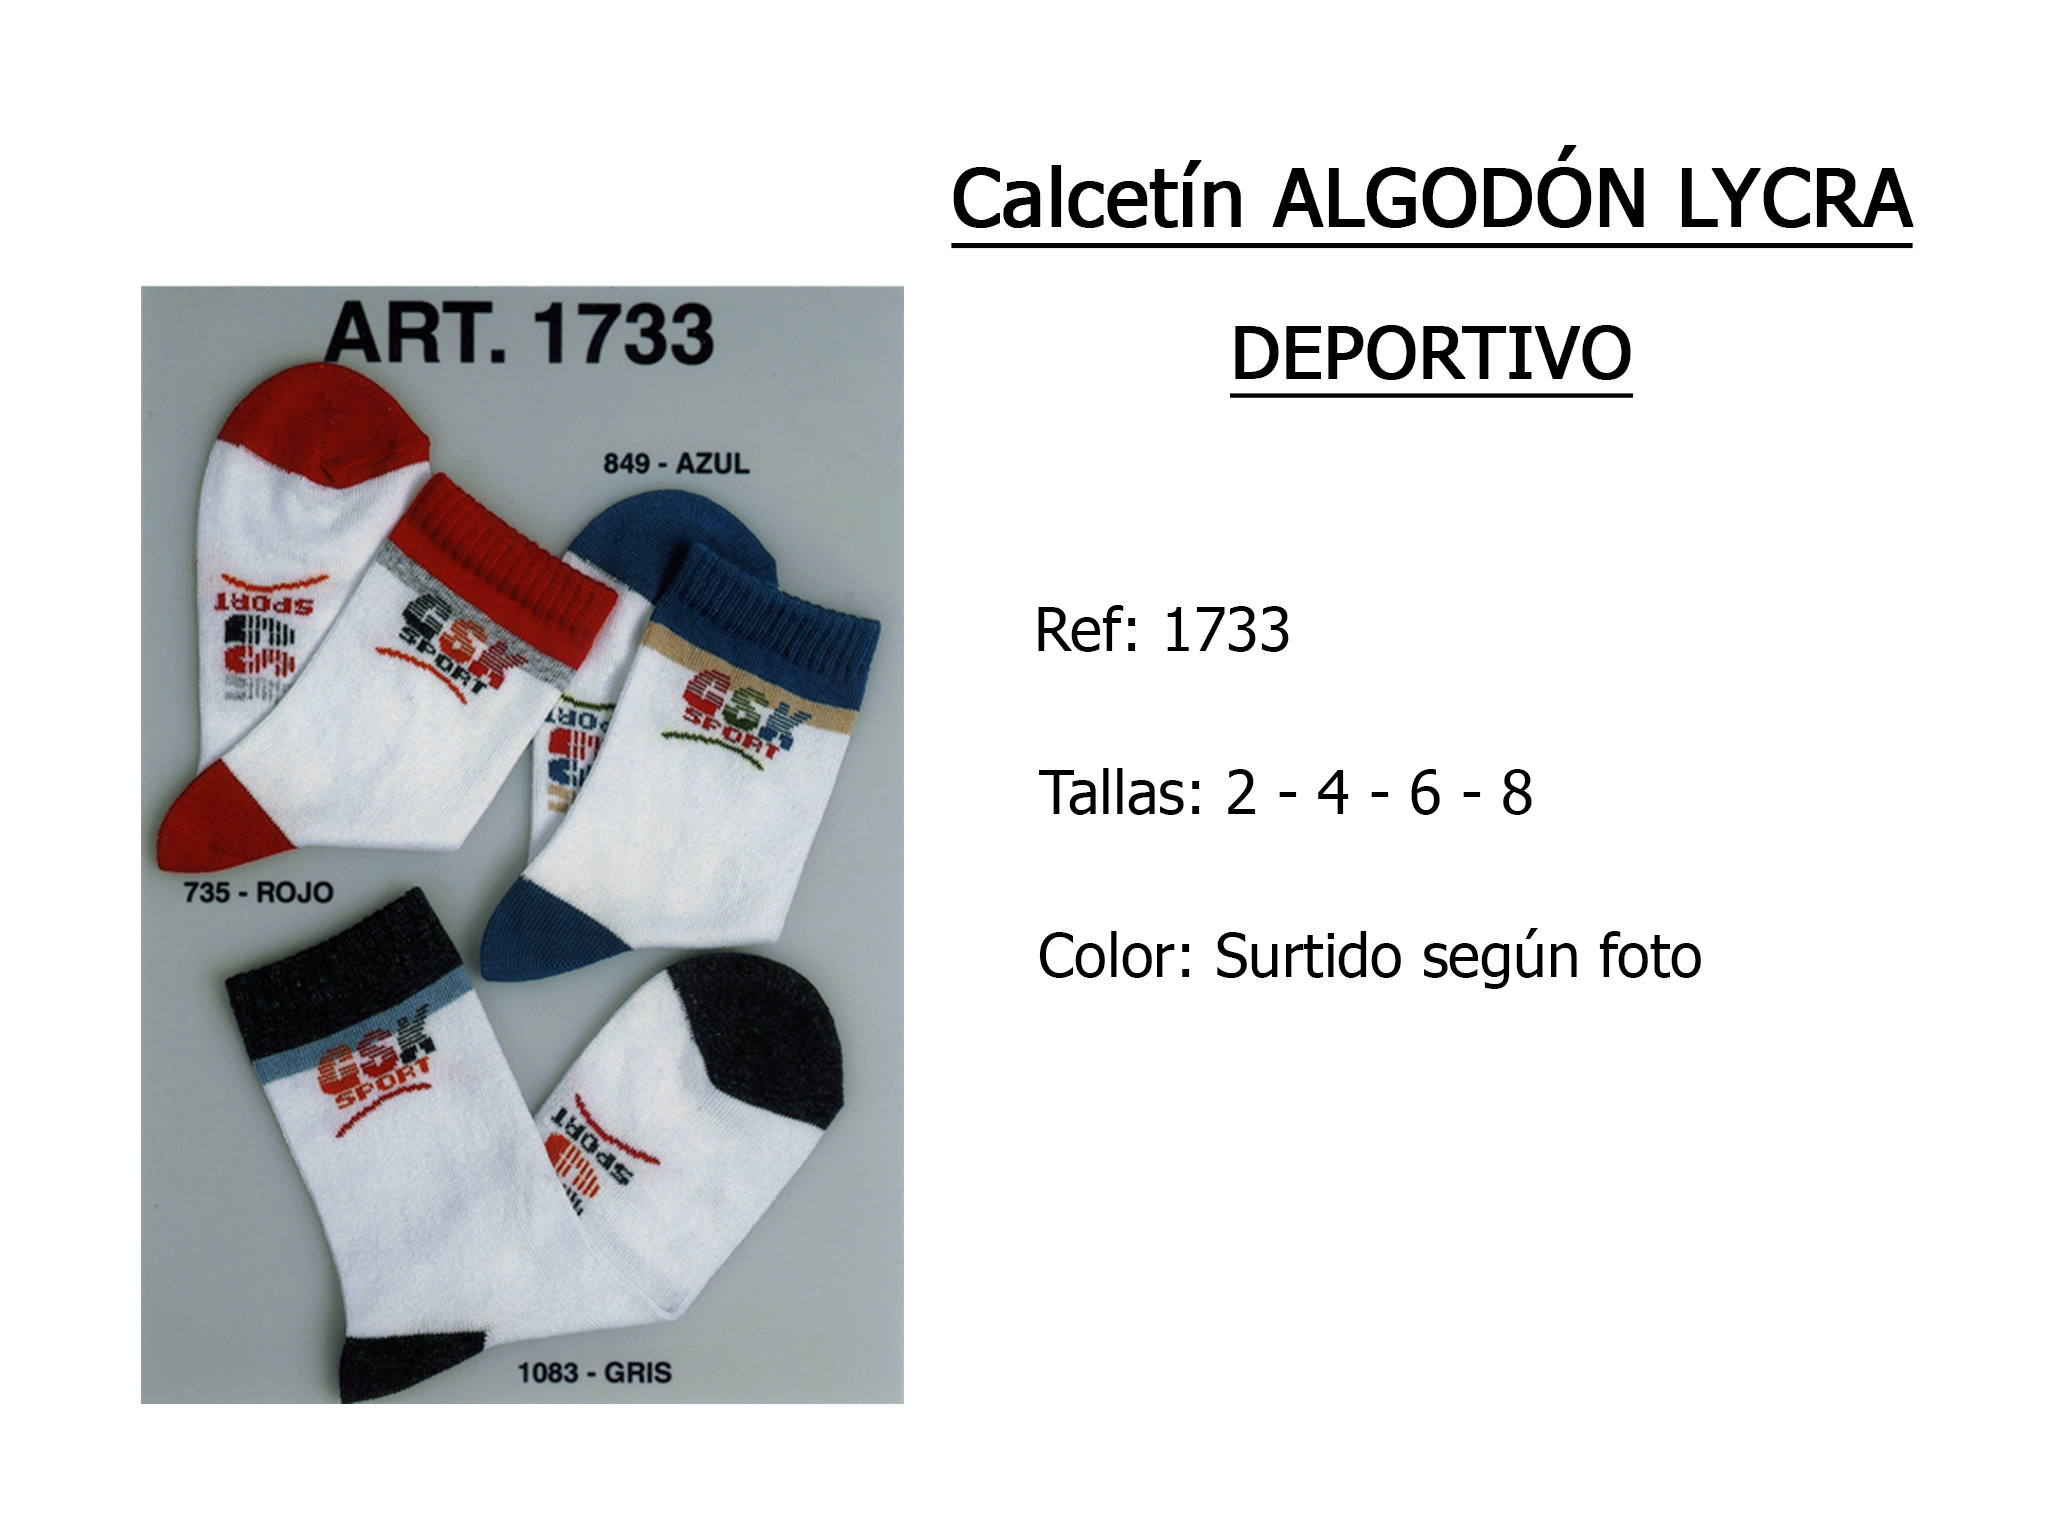 CALCETIN algodon lycra deportivo 1733